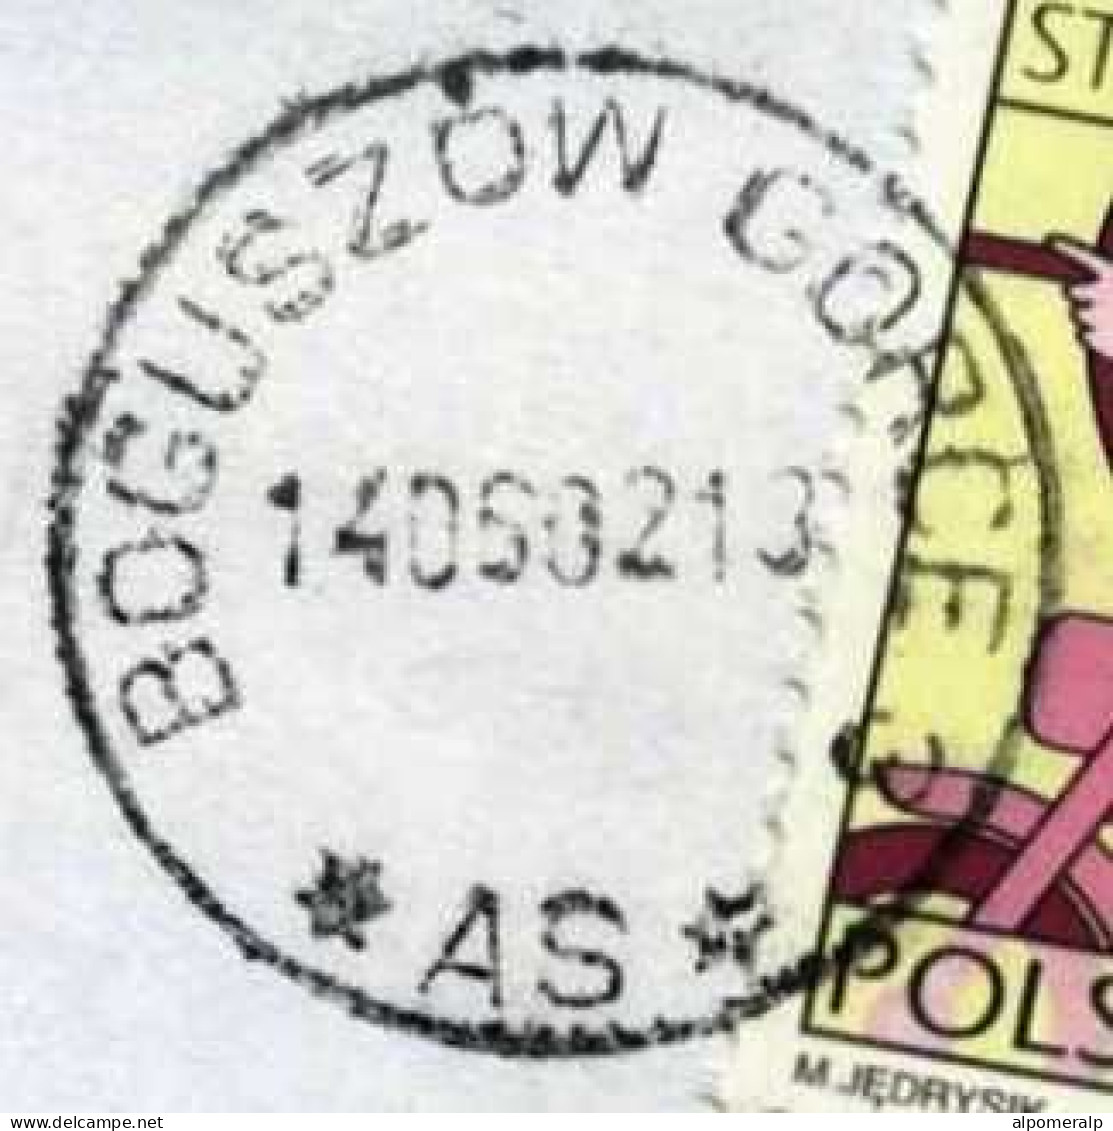 Poland, Boguszów-Gorce 2002 Single Stamp Mail Cover Used To Istanbul | Mi 3603 Signs Of The Zodiac: Sagittarius - Briefe U. Dokumente